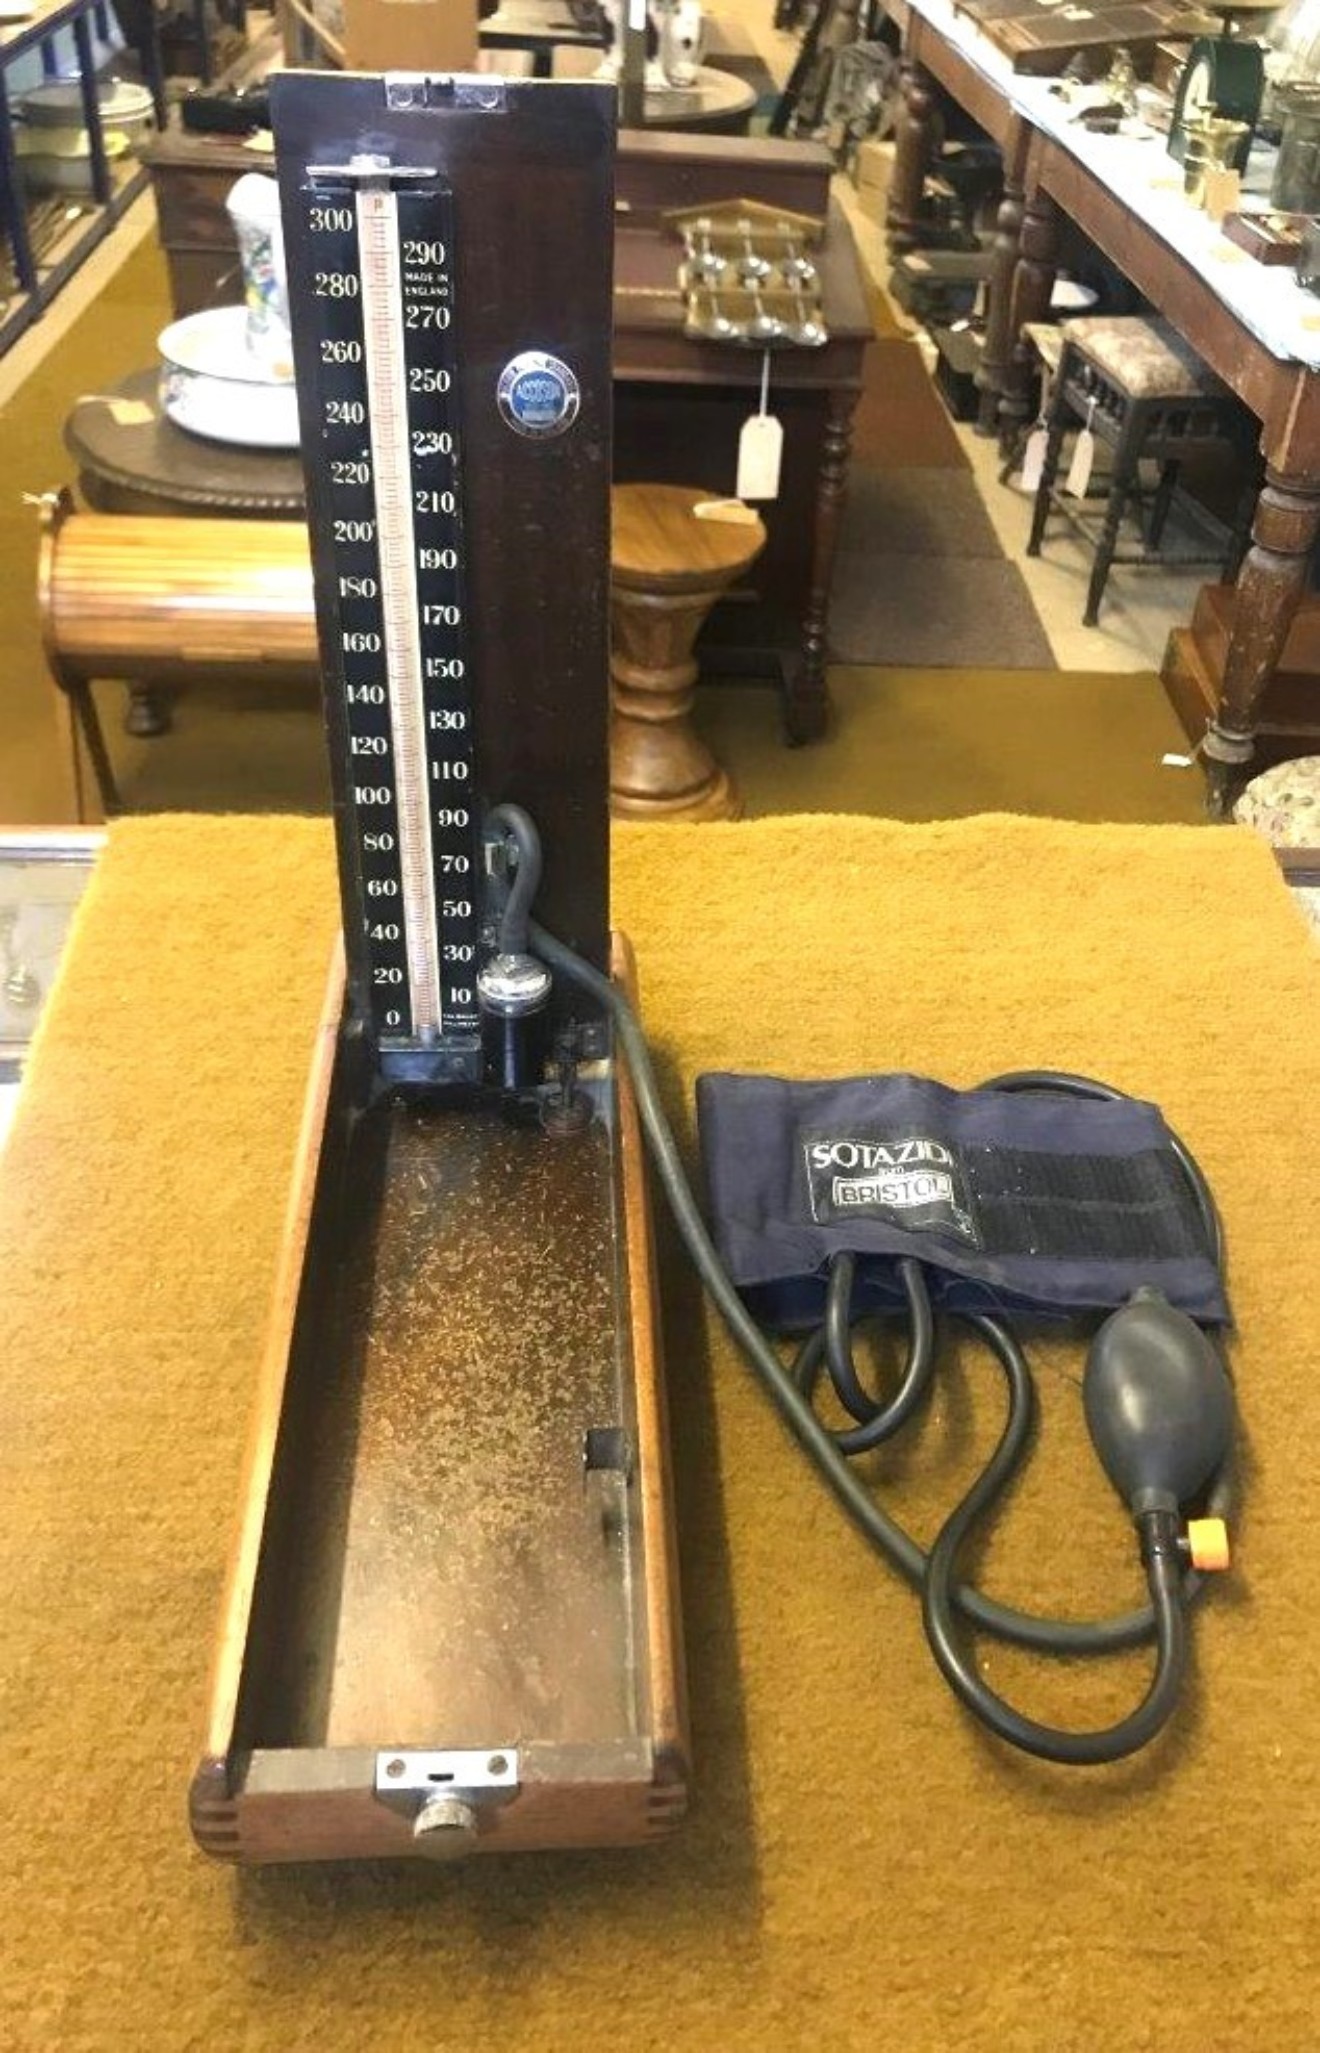 Vintage Accoson Blood Pressure Standard Sphygmomanometer in Wooden Jointed Case